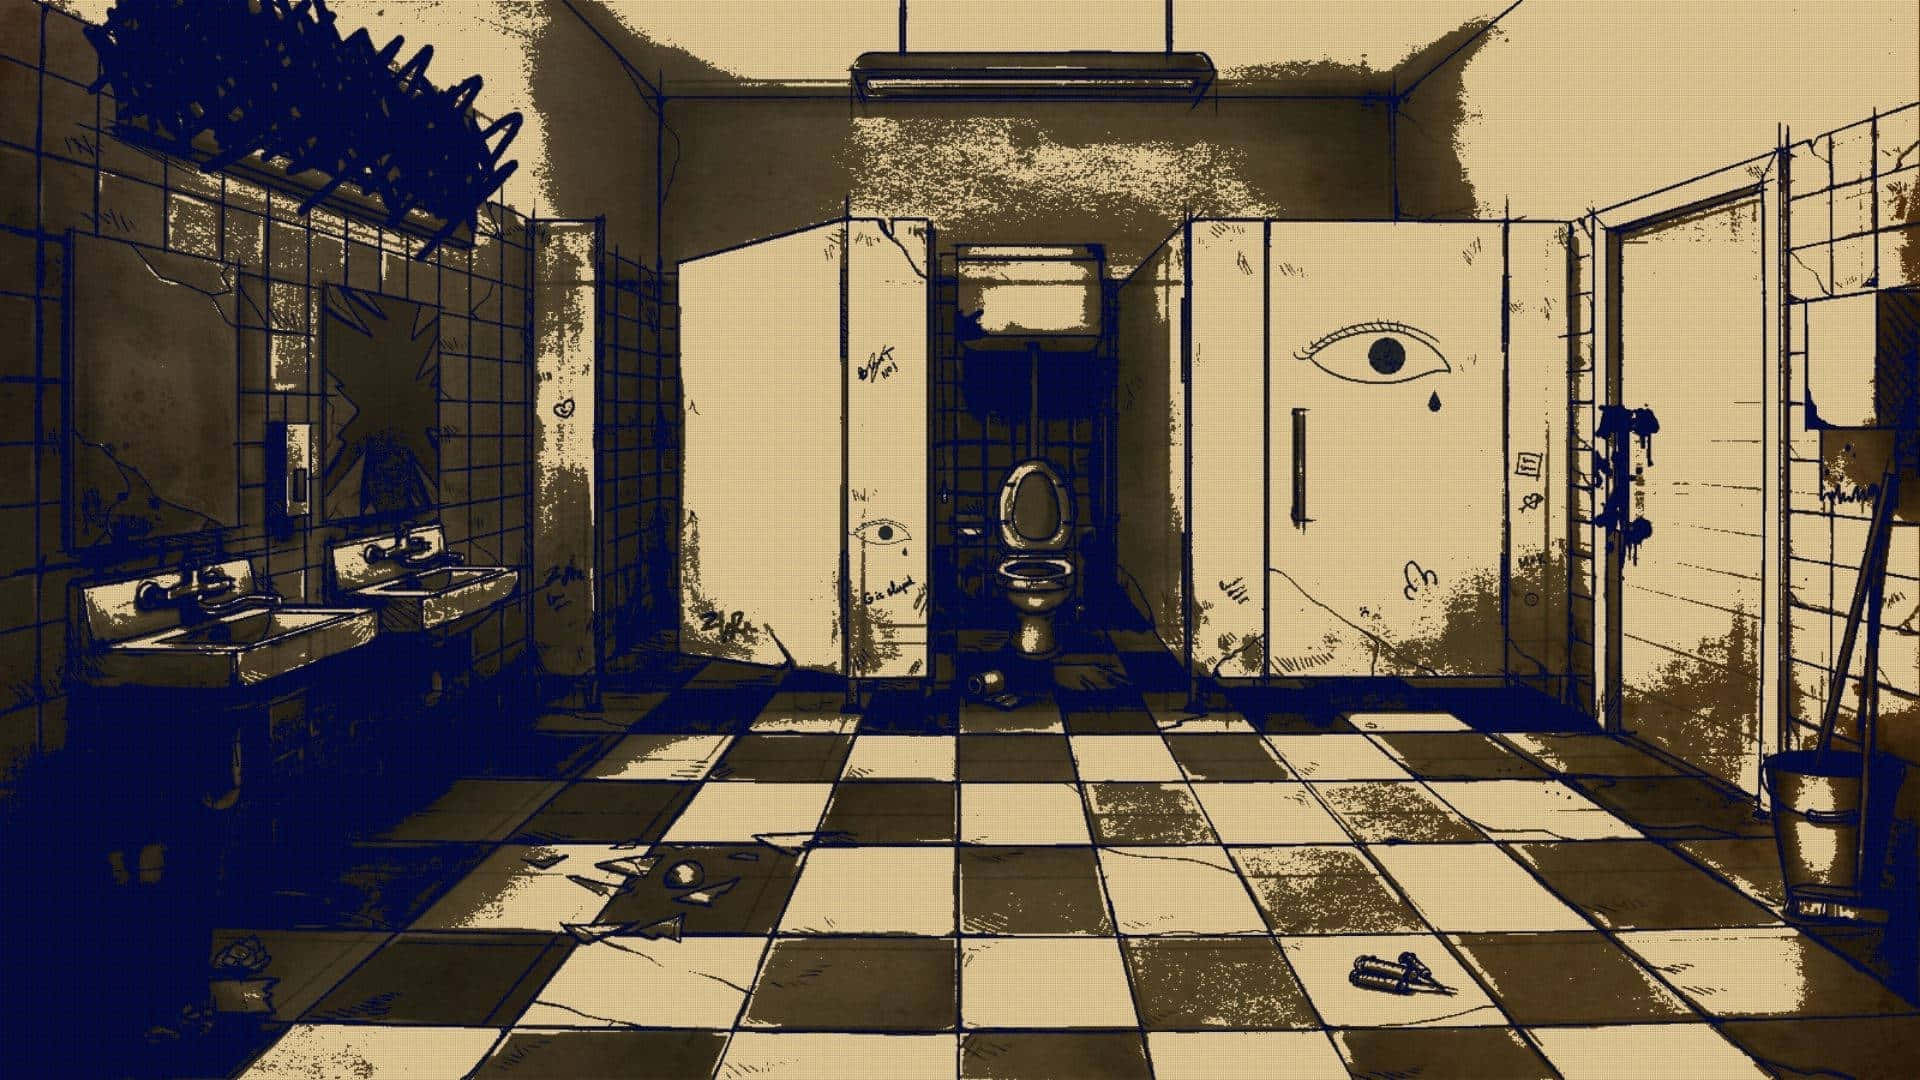 Dreamcore Surreal Bathroom Aesthetic.jpg Wallpaper